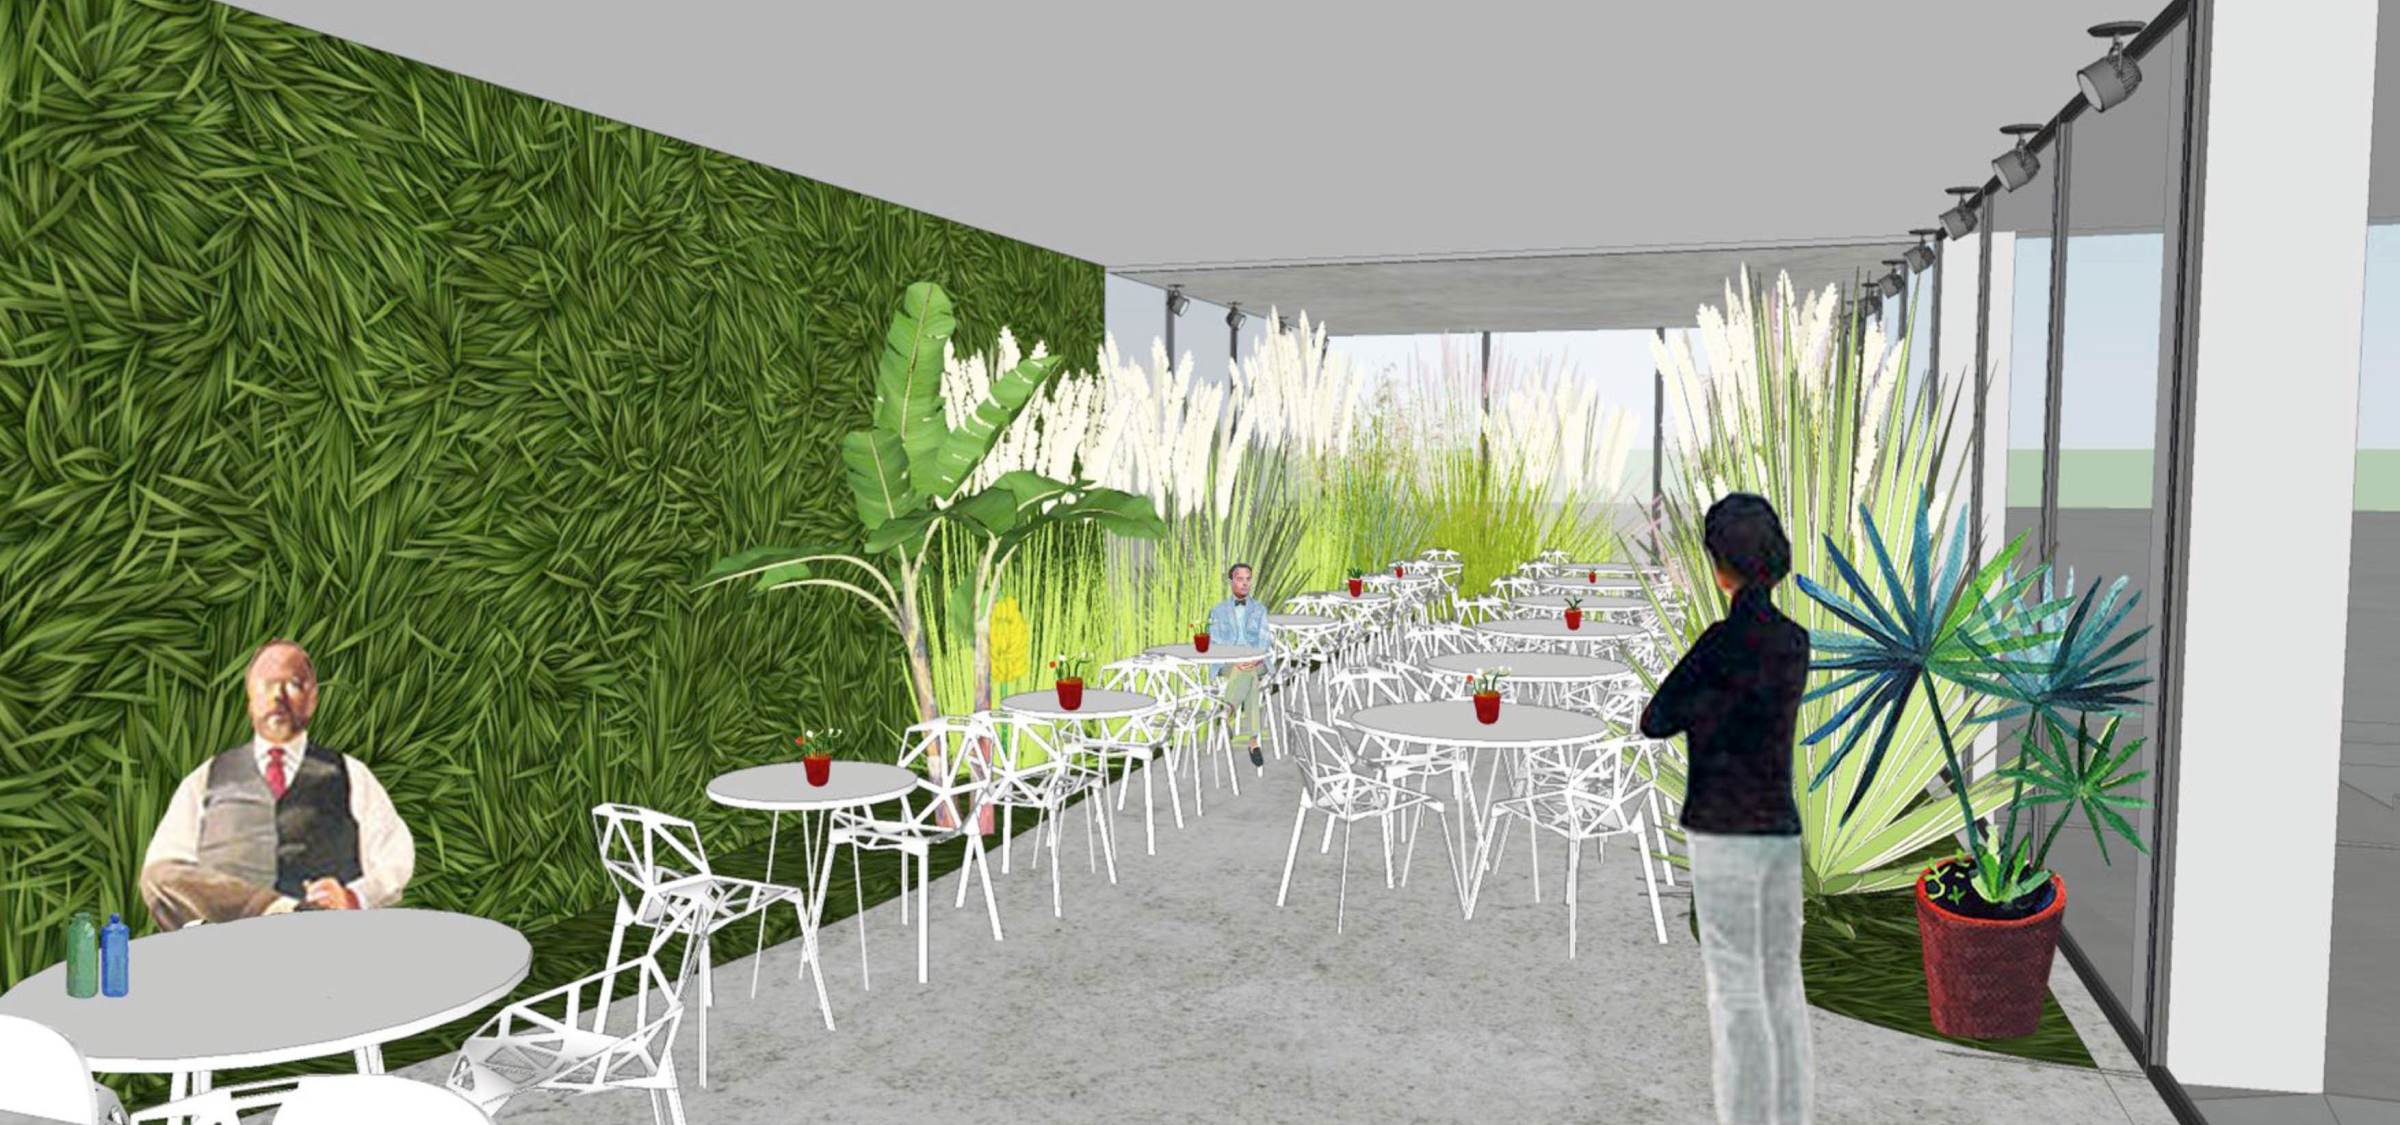 Infocentrum for Botanic Garden | News | Atrium Architekti